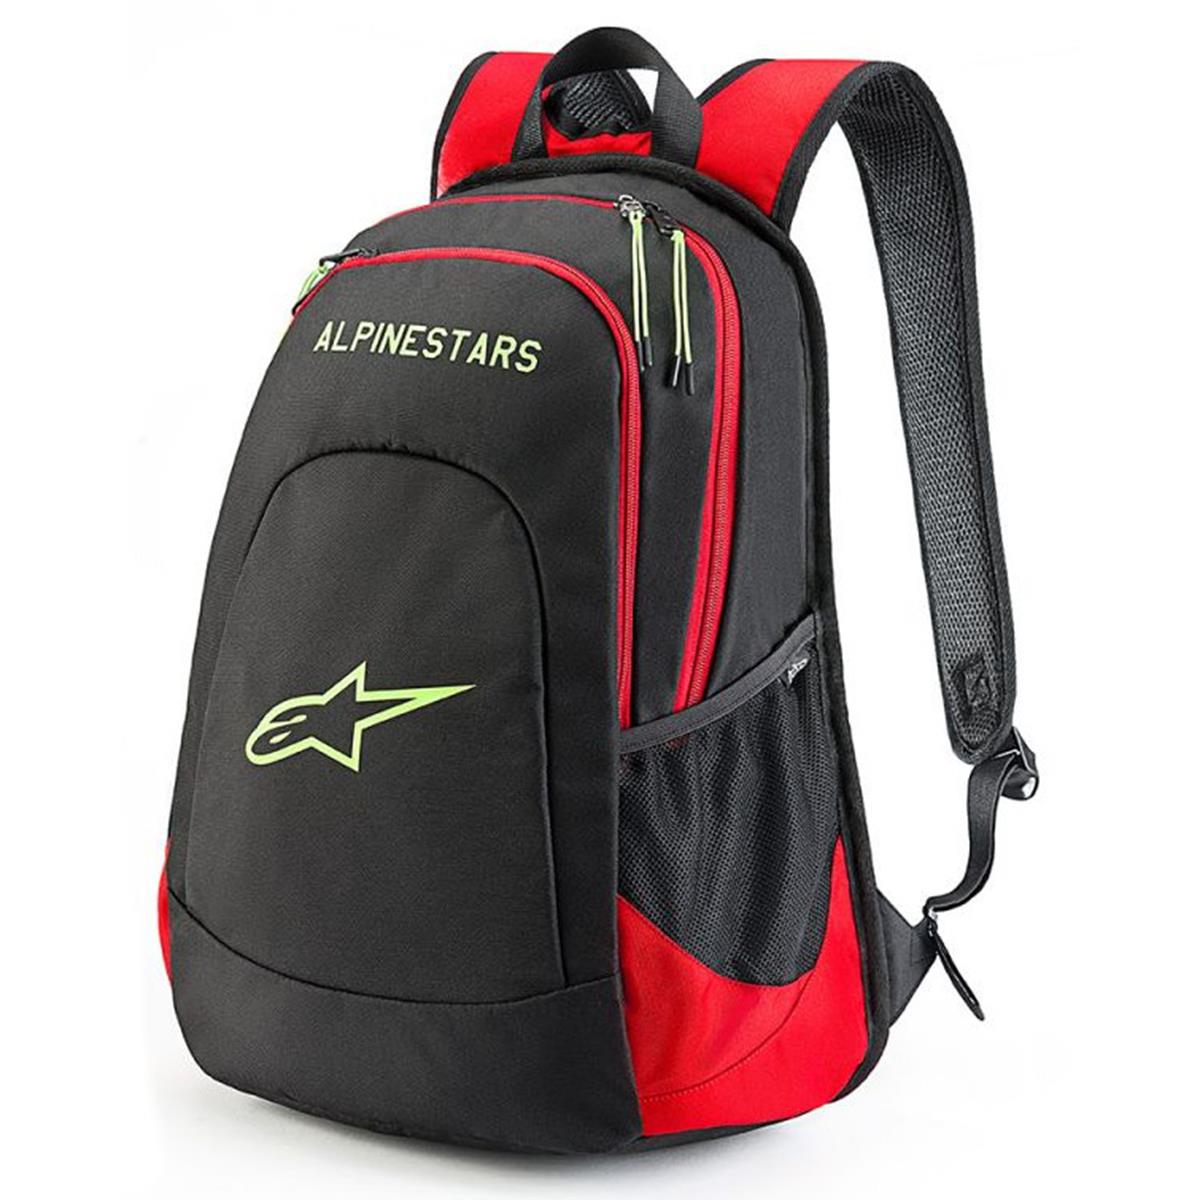 Alpinestars Backpack Decfon Black/Red/Hi Viz Yellow